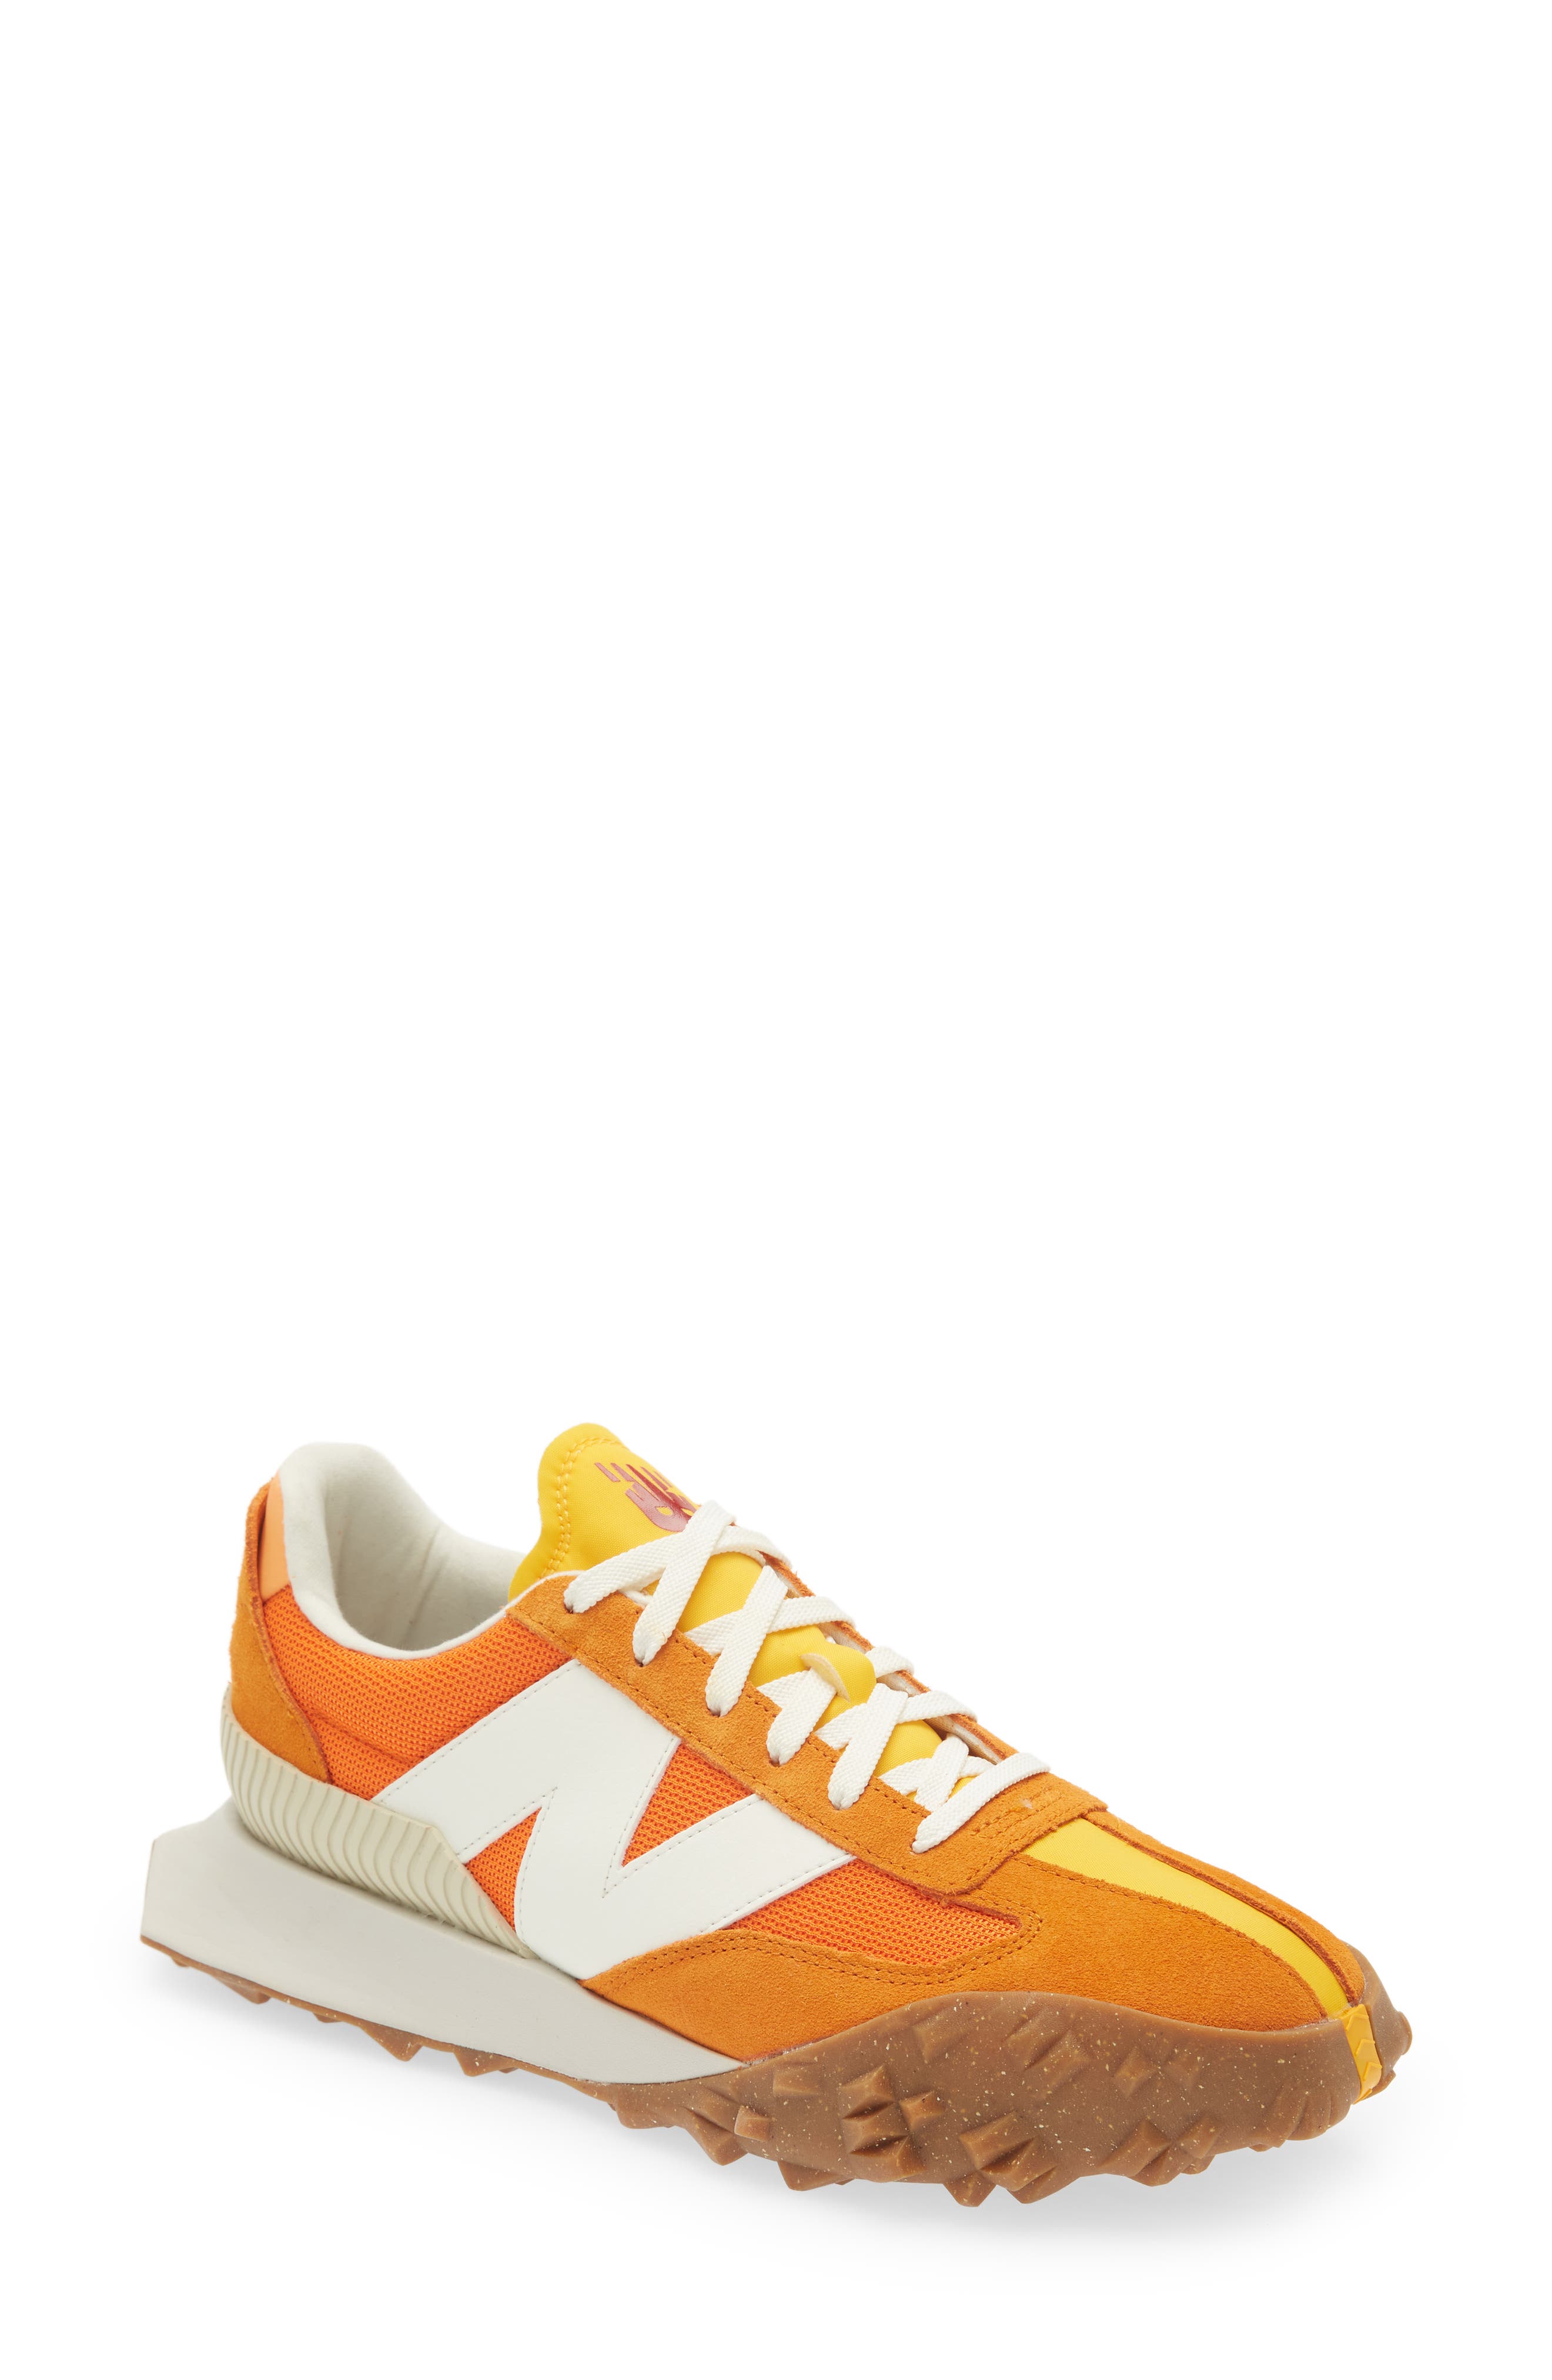 New Balance XC-72 Sneaker in Vintage Orange/Varsity Orange